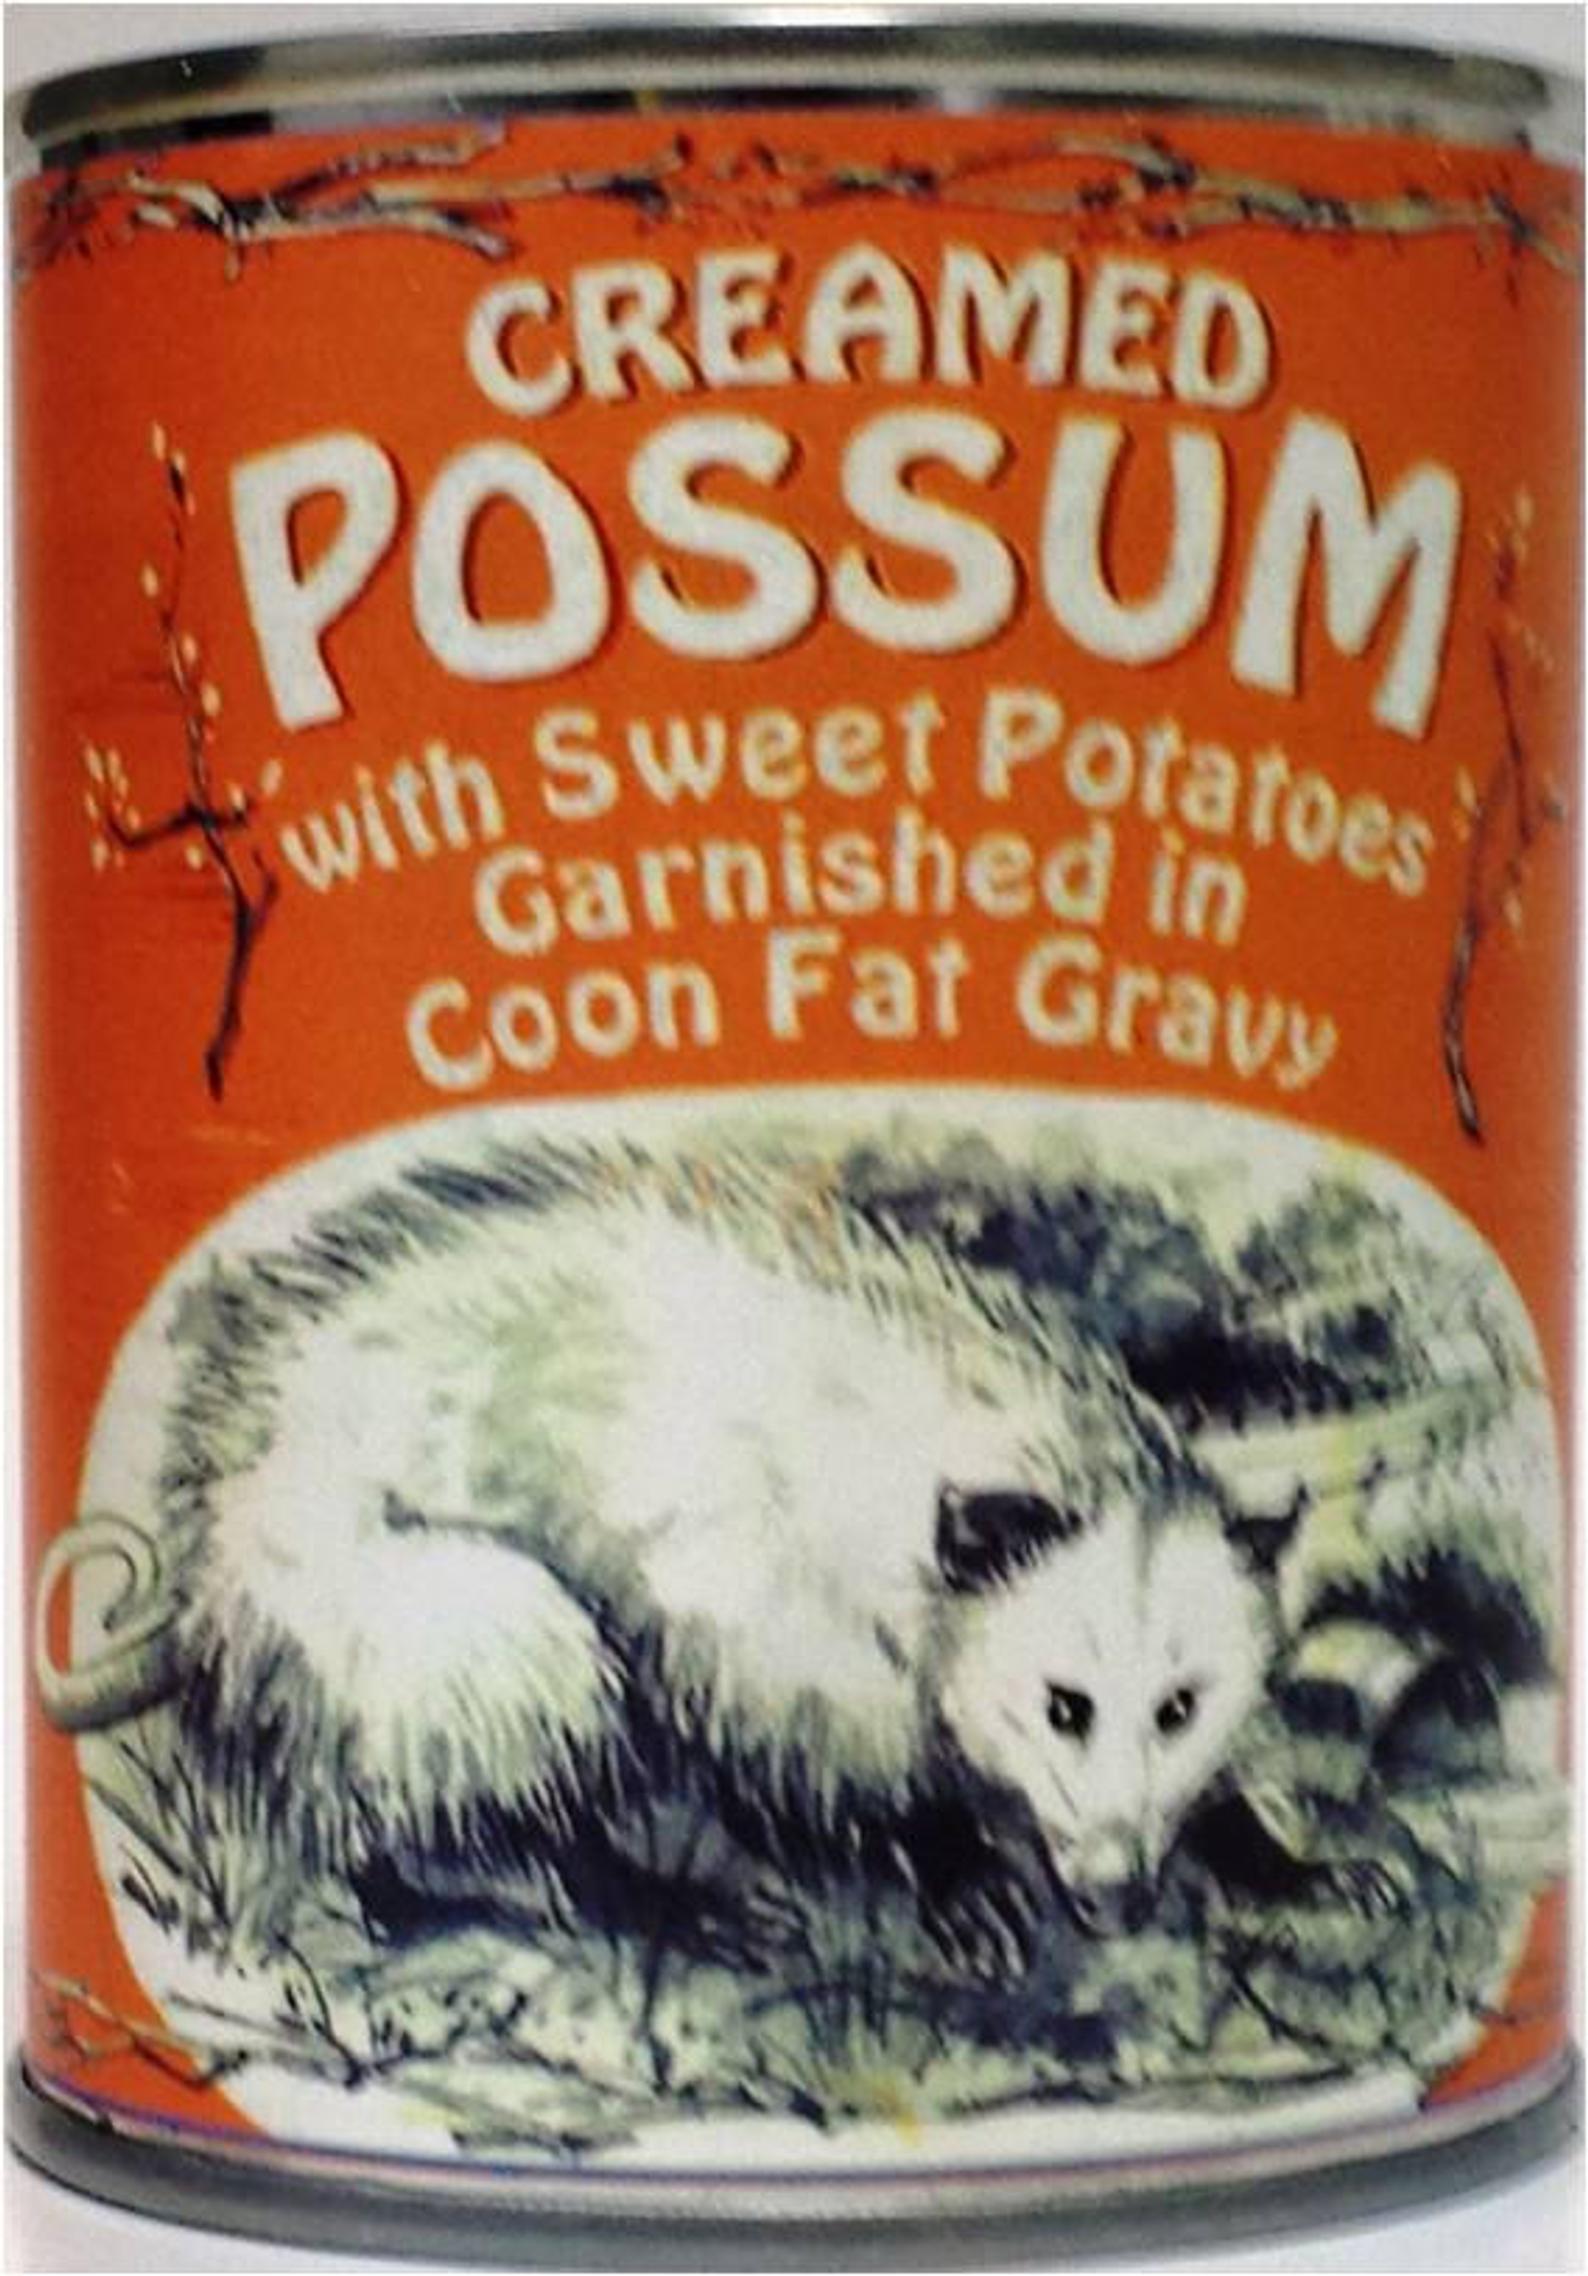 creamed possum in coon fat gravy - Creamed Possum et Potatoes Neith Sweet Pota Garnished in coon Far Gravu Wii